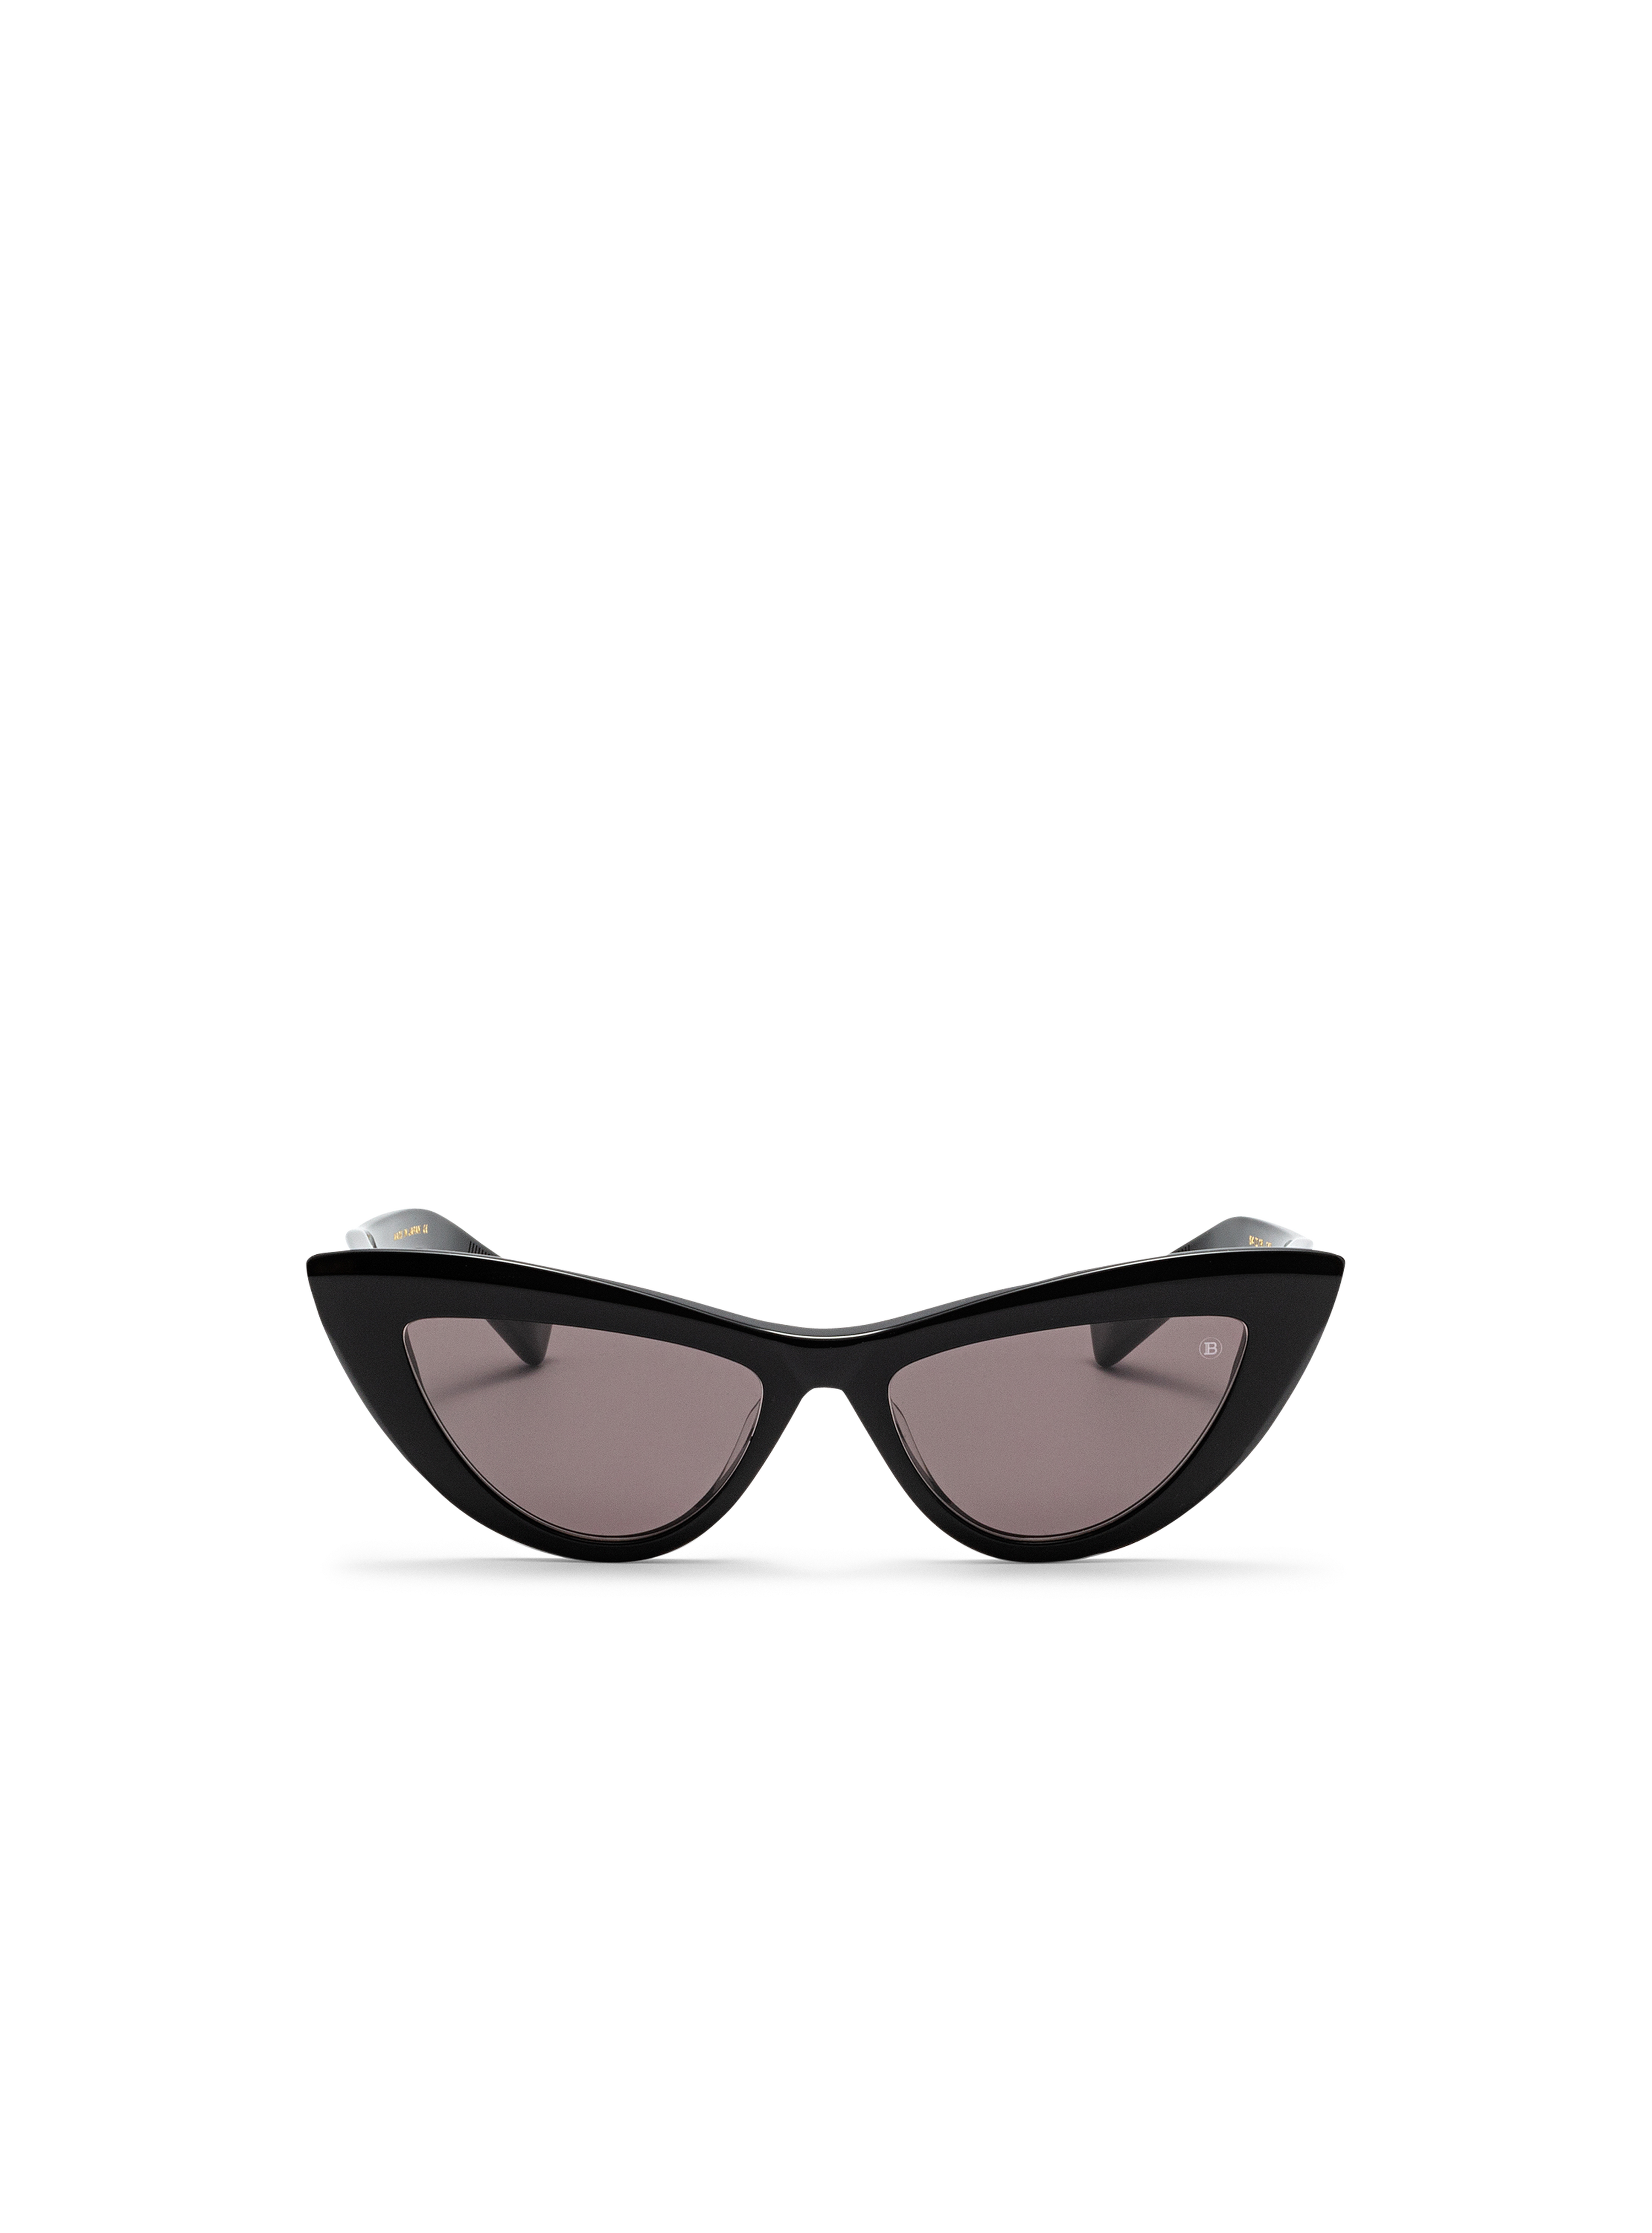 Jolie Sunglasses, black